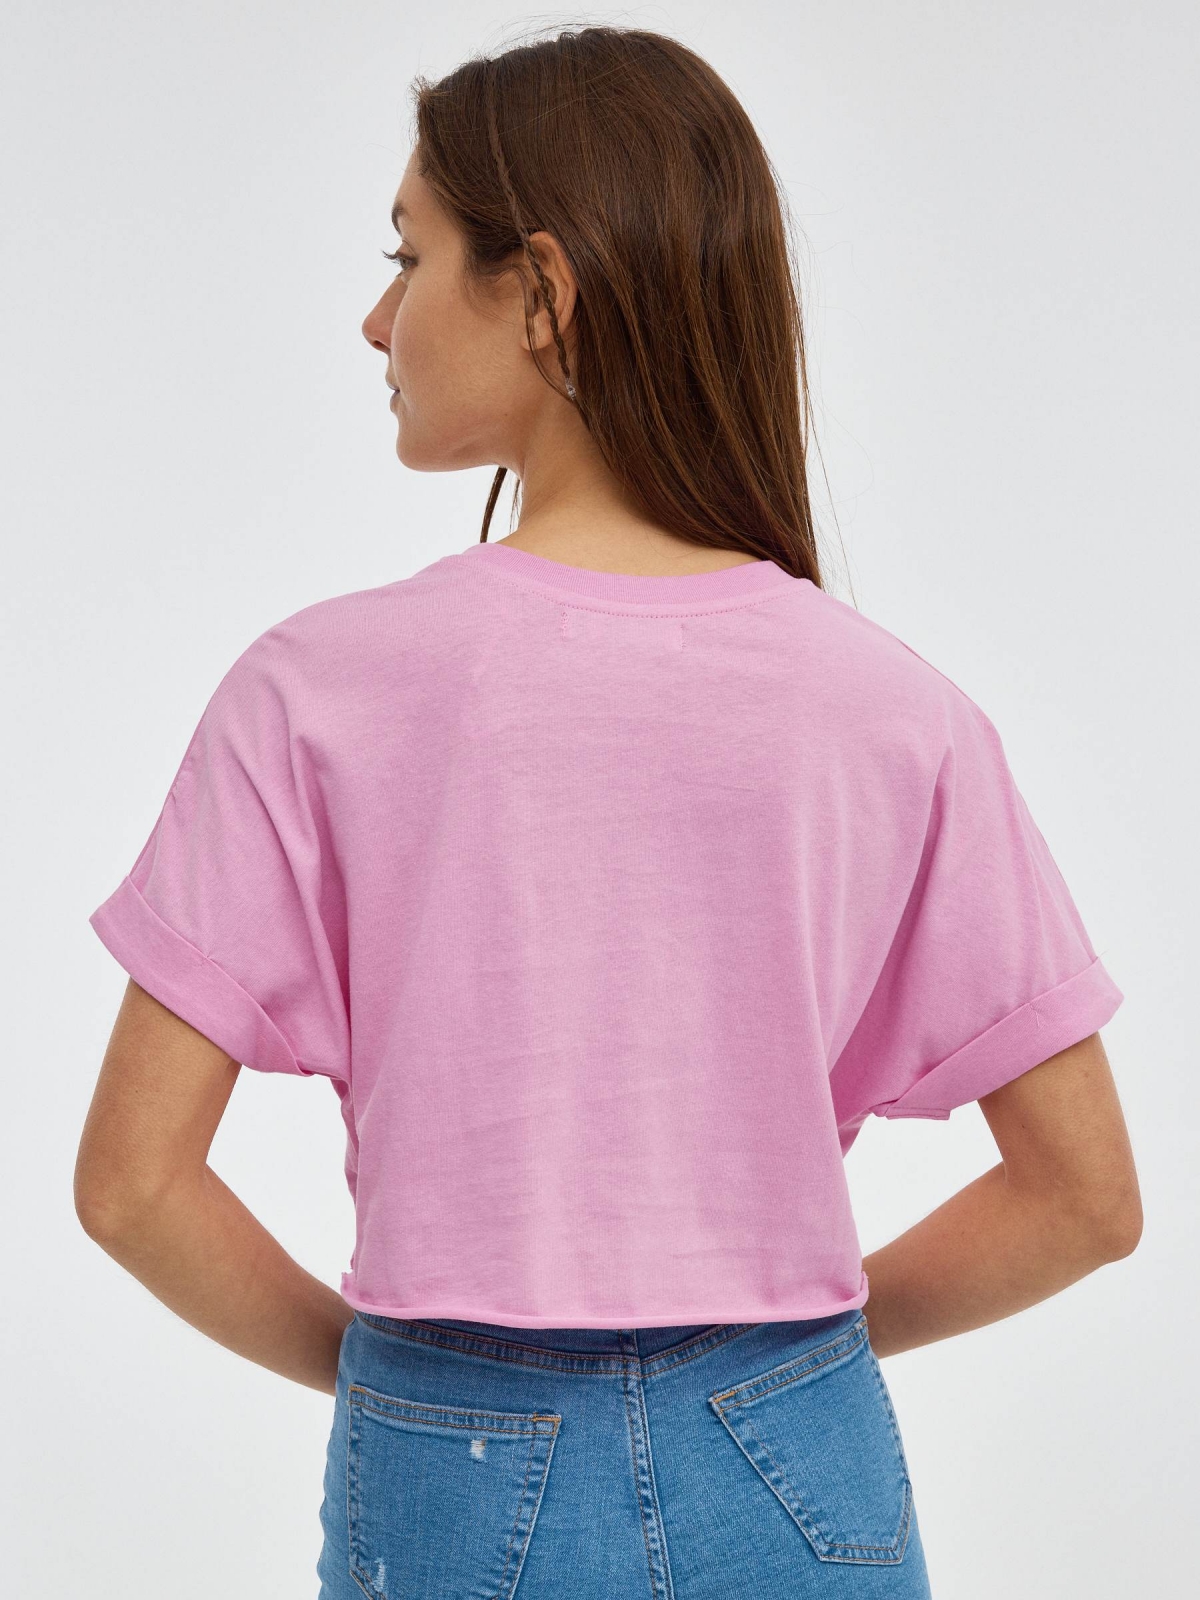 Camiseta crop Bali rosa vista media trasera